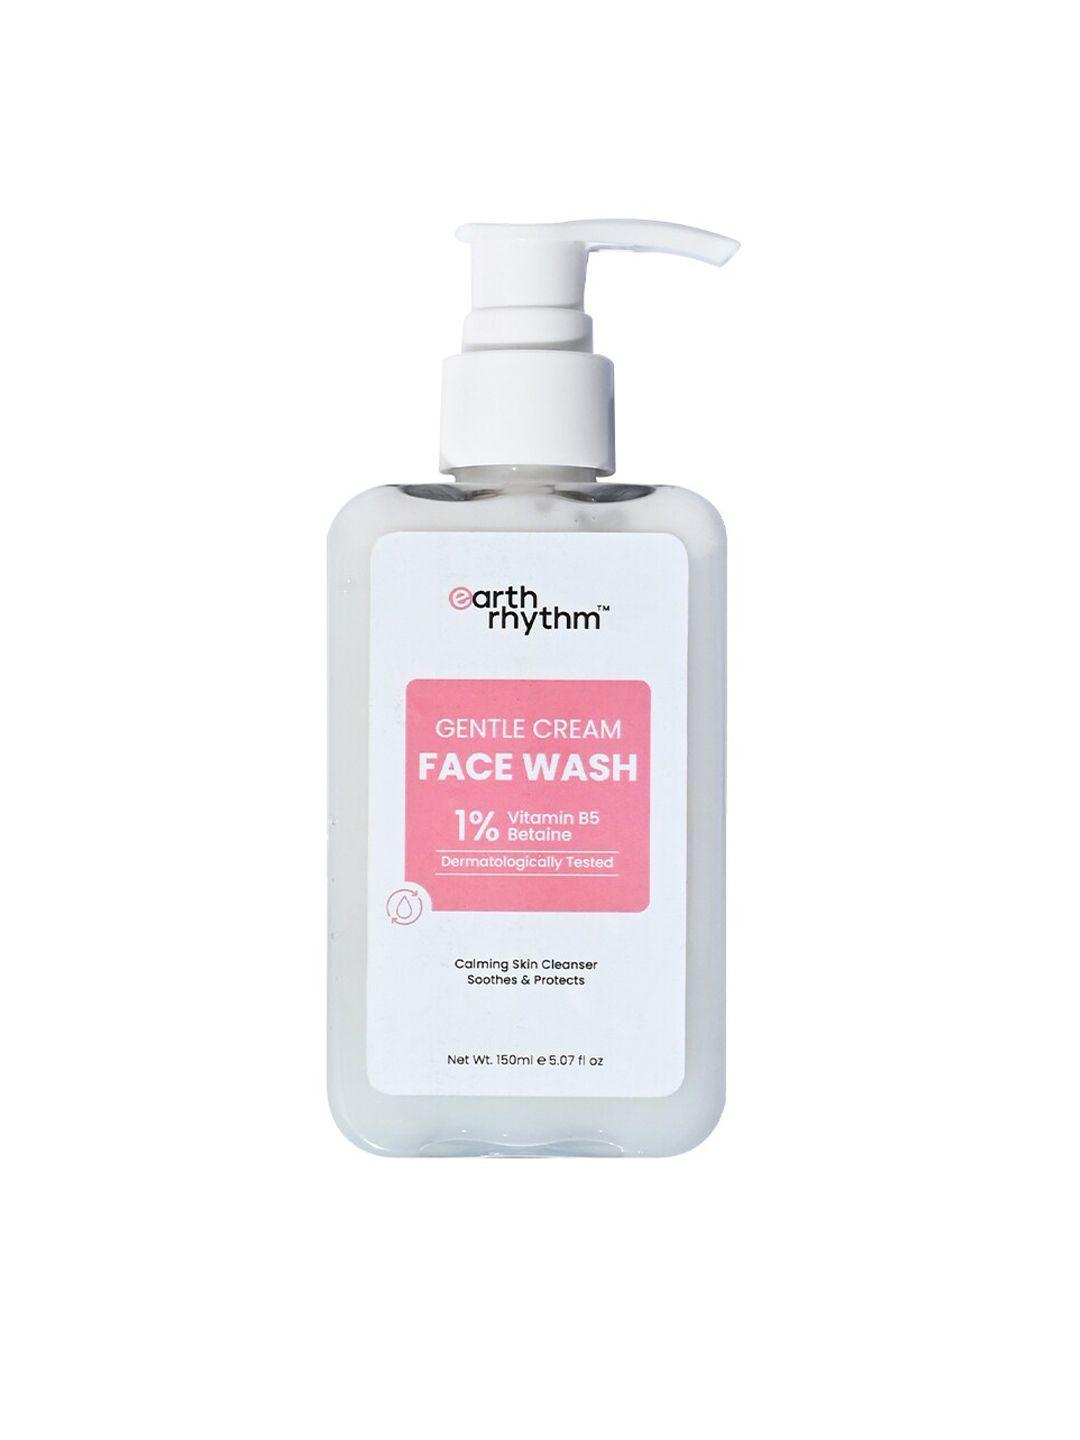 earth rhythm gentle cream facewash with 1% vitamin b5 betaine - 150ml